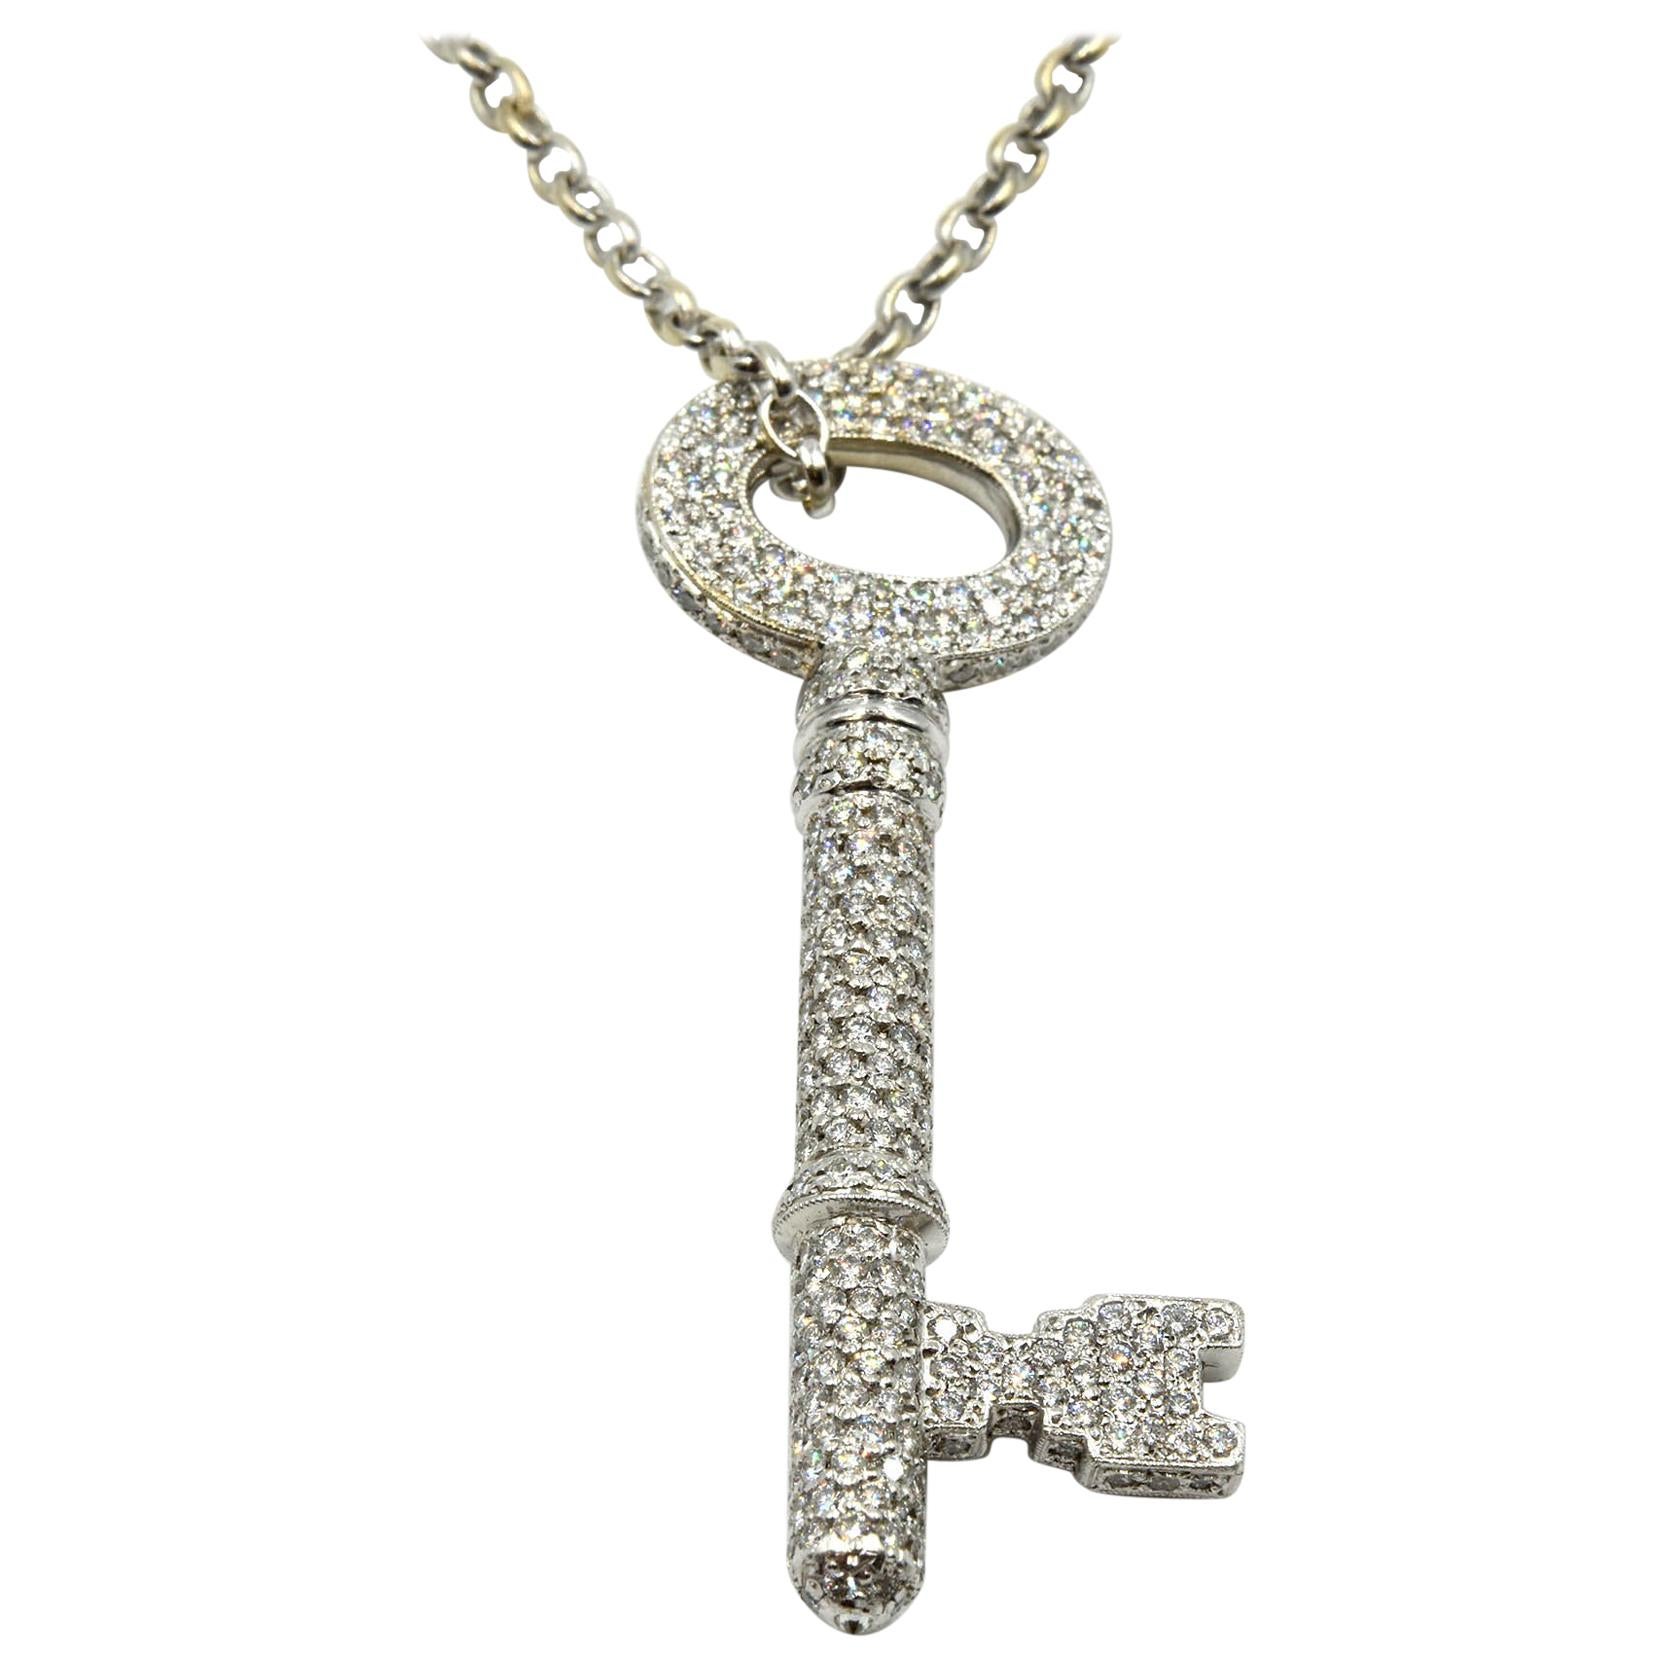 4.70 Carat Diamond Key Pendant on Necklace 18 Karat White Gold